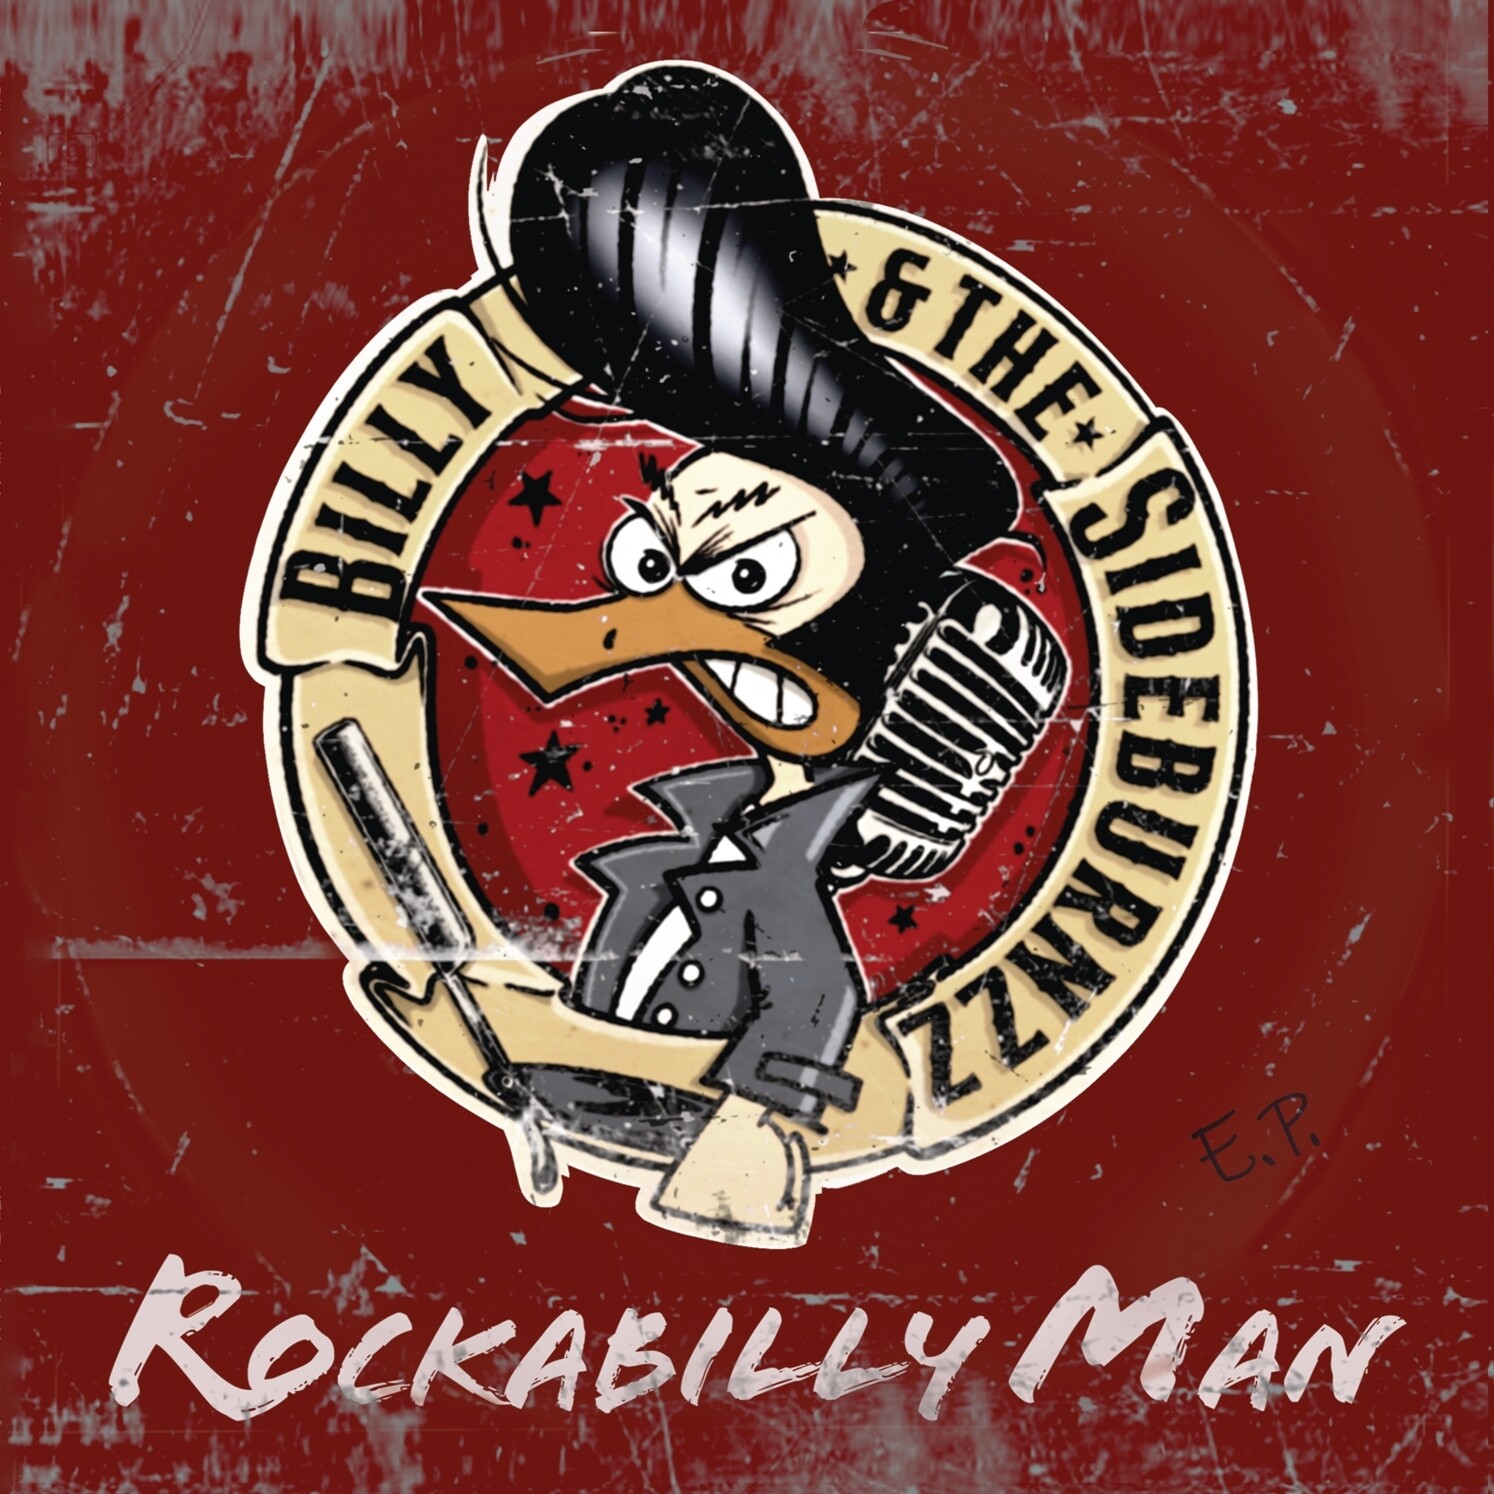 Billy & the Sideburnzz - "Rockabilly Man"